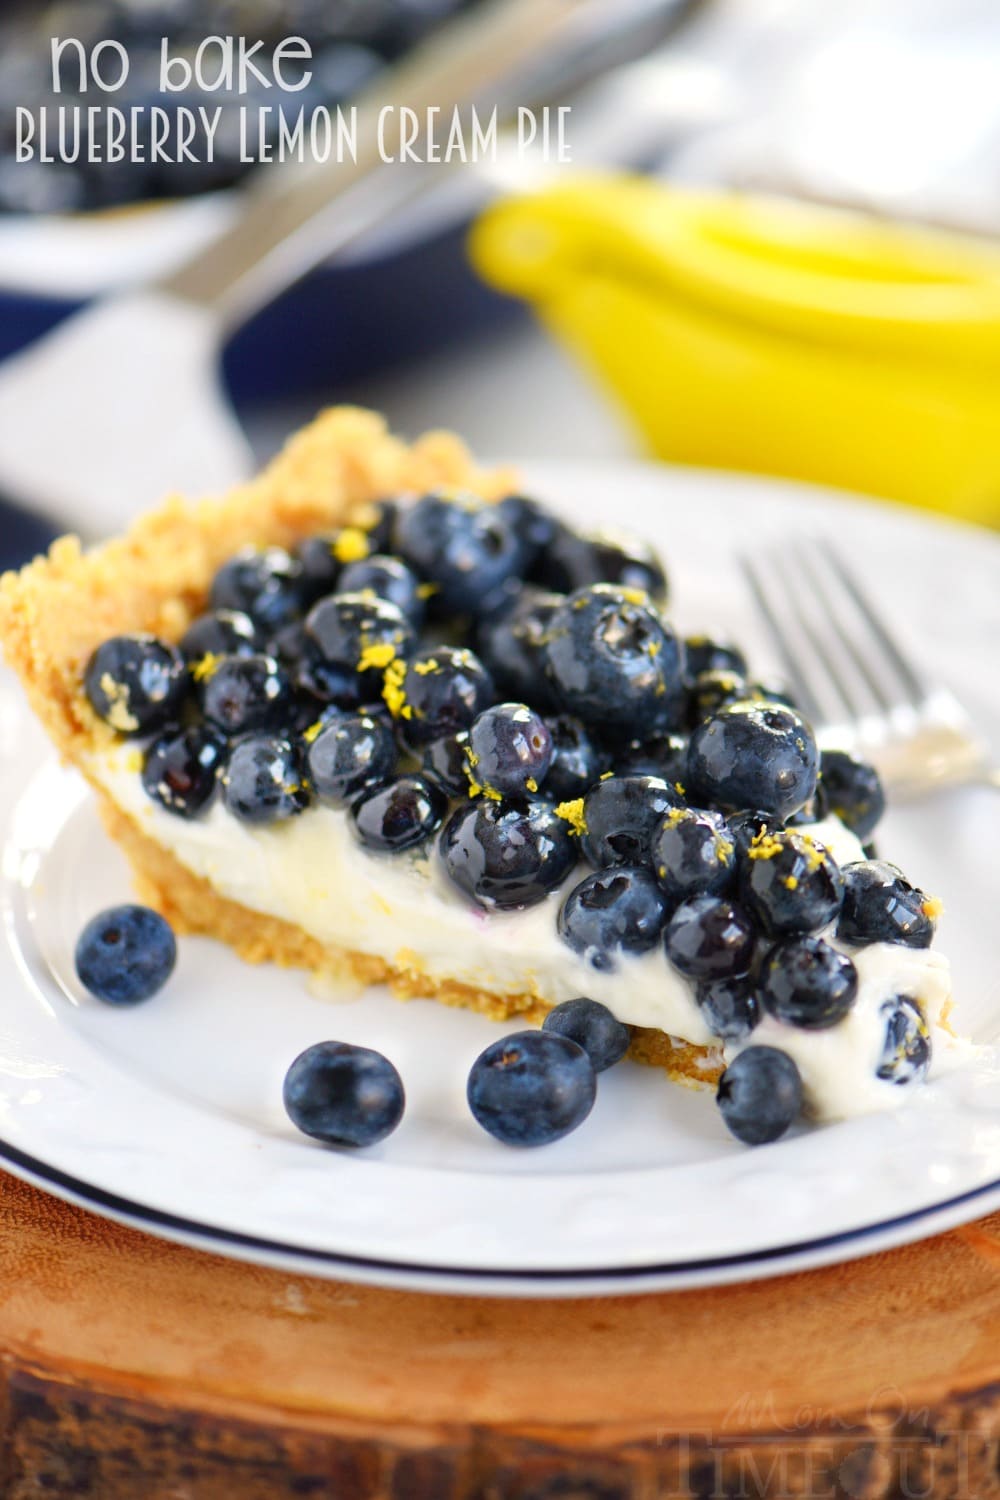 lemon-cream-pie-recipe-blueberry-topping